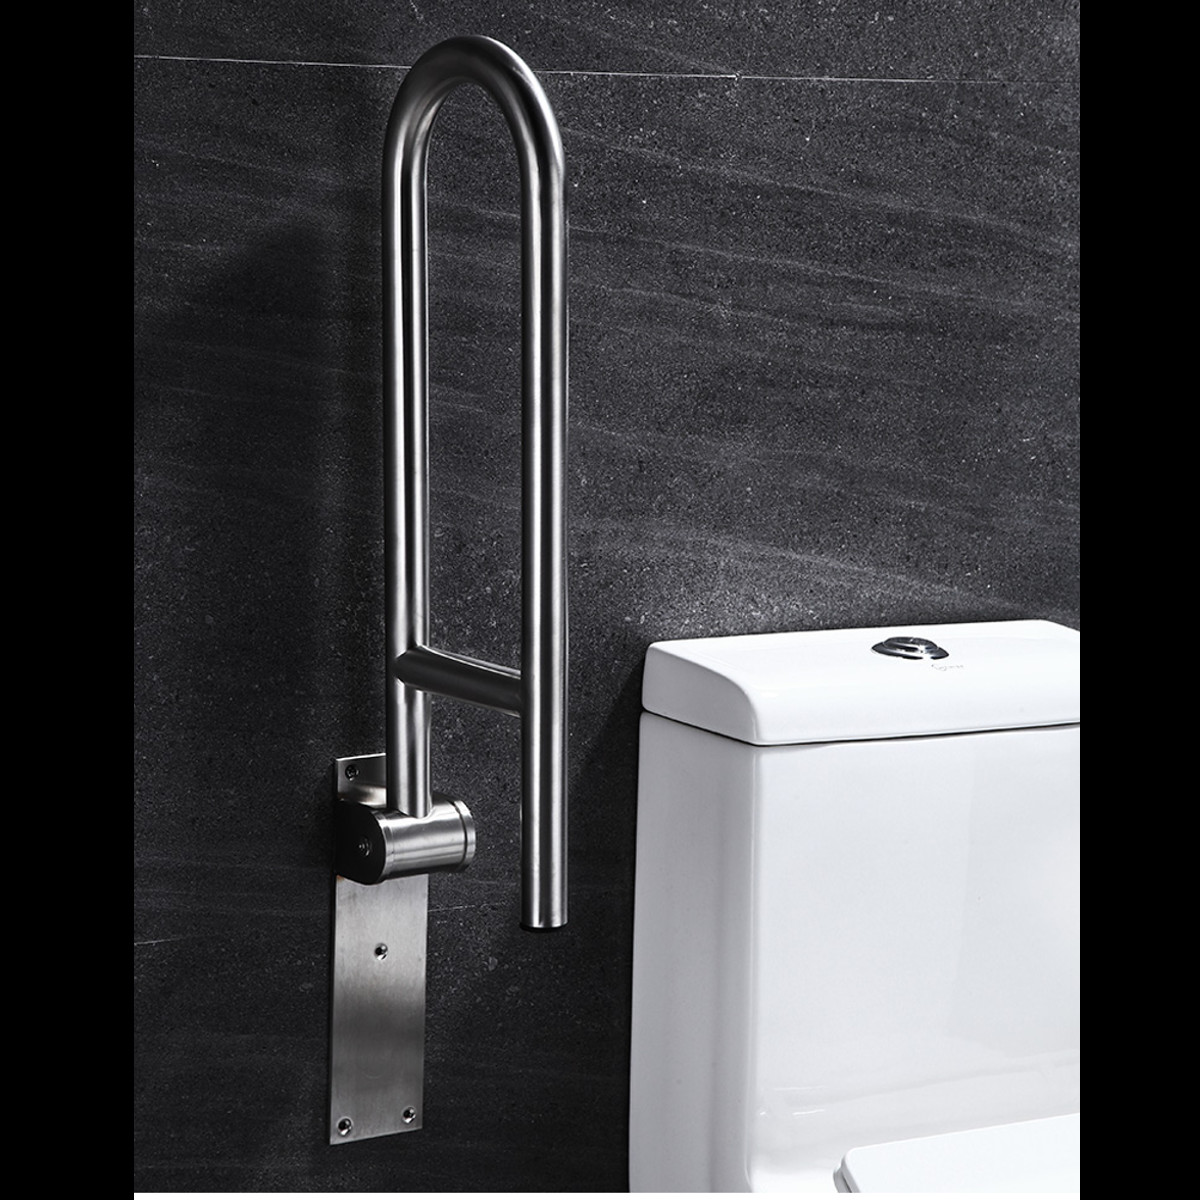 Stainless-Steel-Toilet-Safety-Frame-Rail-Grab-Bar-Handicap-Bathroom-Hand-Grips-1650108-2